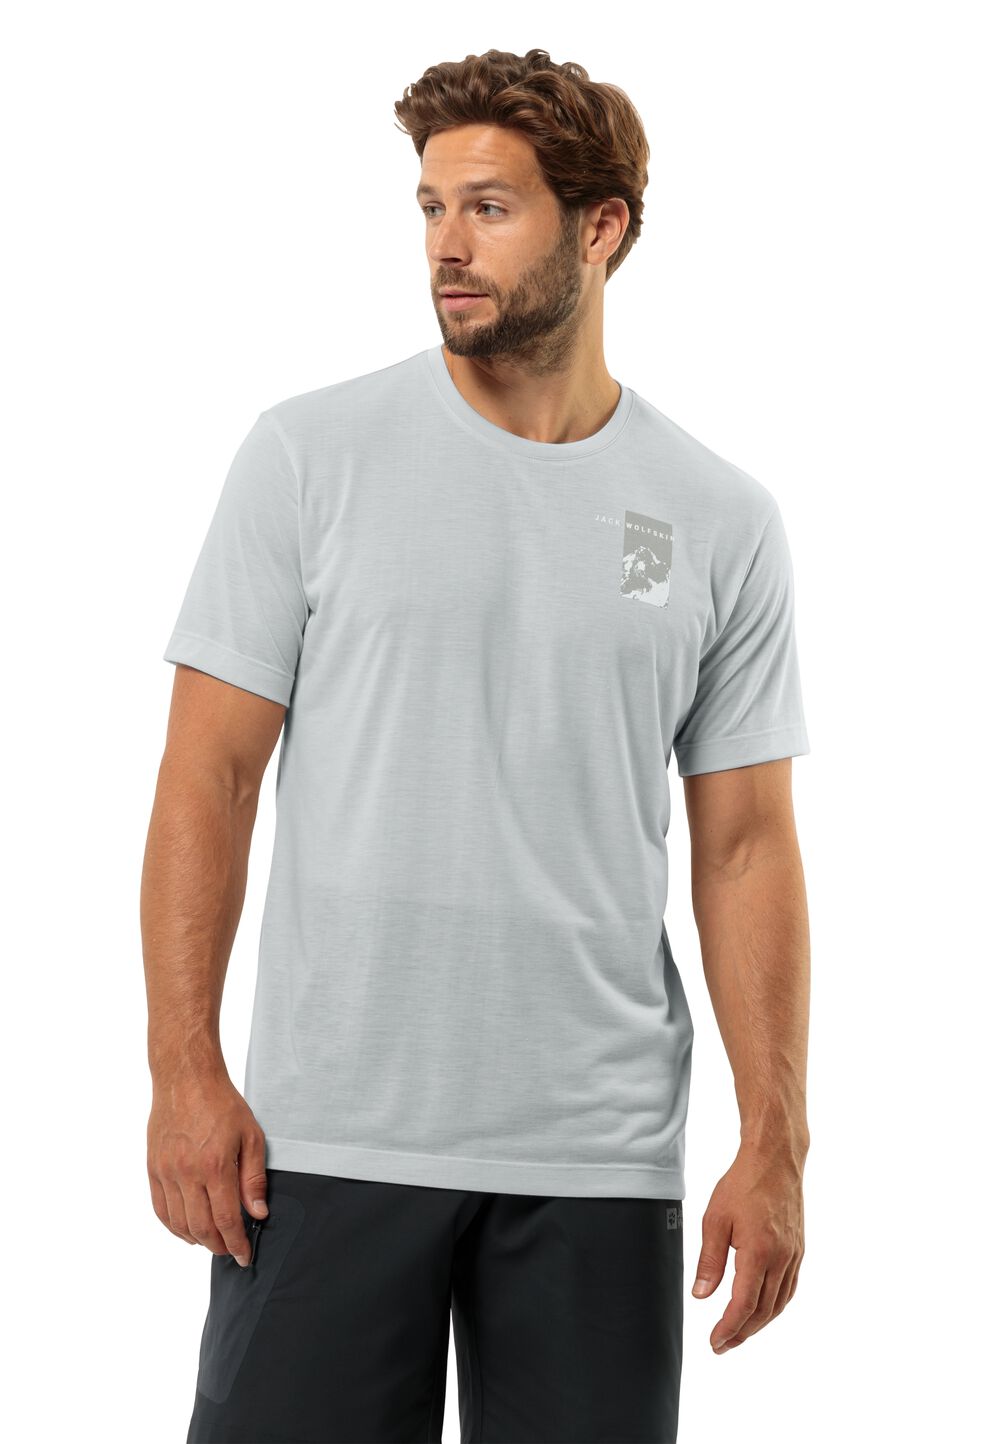 Jack Wolfskin Vonnan S S Graphic T-Shirt Men Functioneel shirt Heren S grijs cool grey